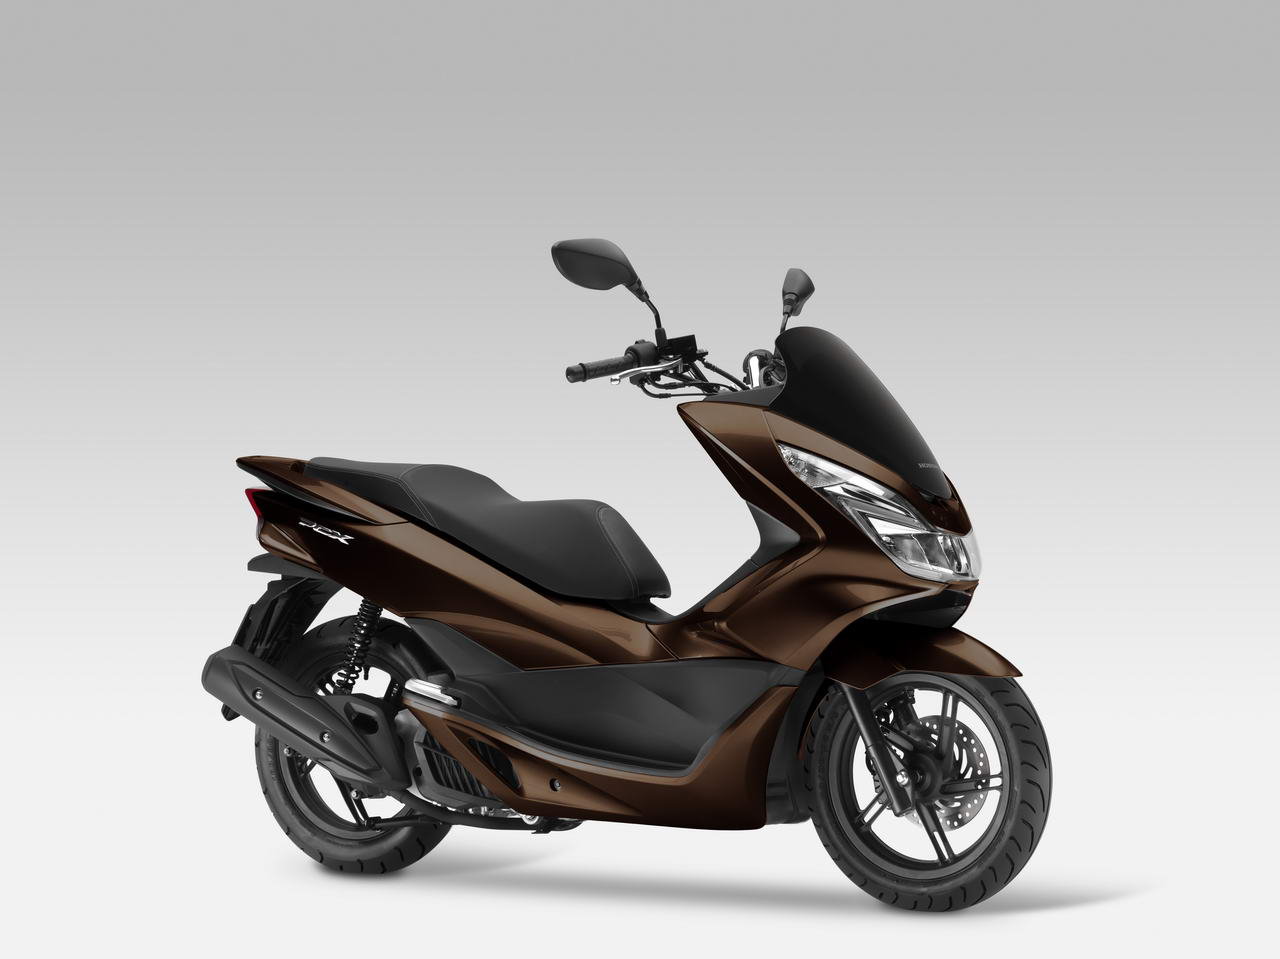 Listino Honda PCX 150 Scooter Ruote basse - image 13520_1 on https://moto.motori.net